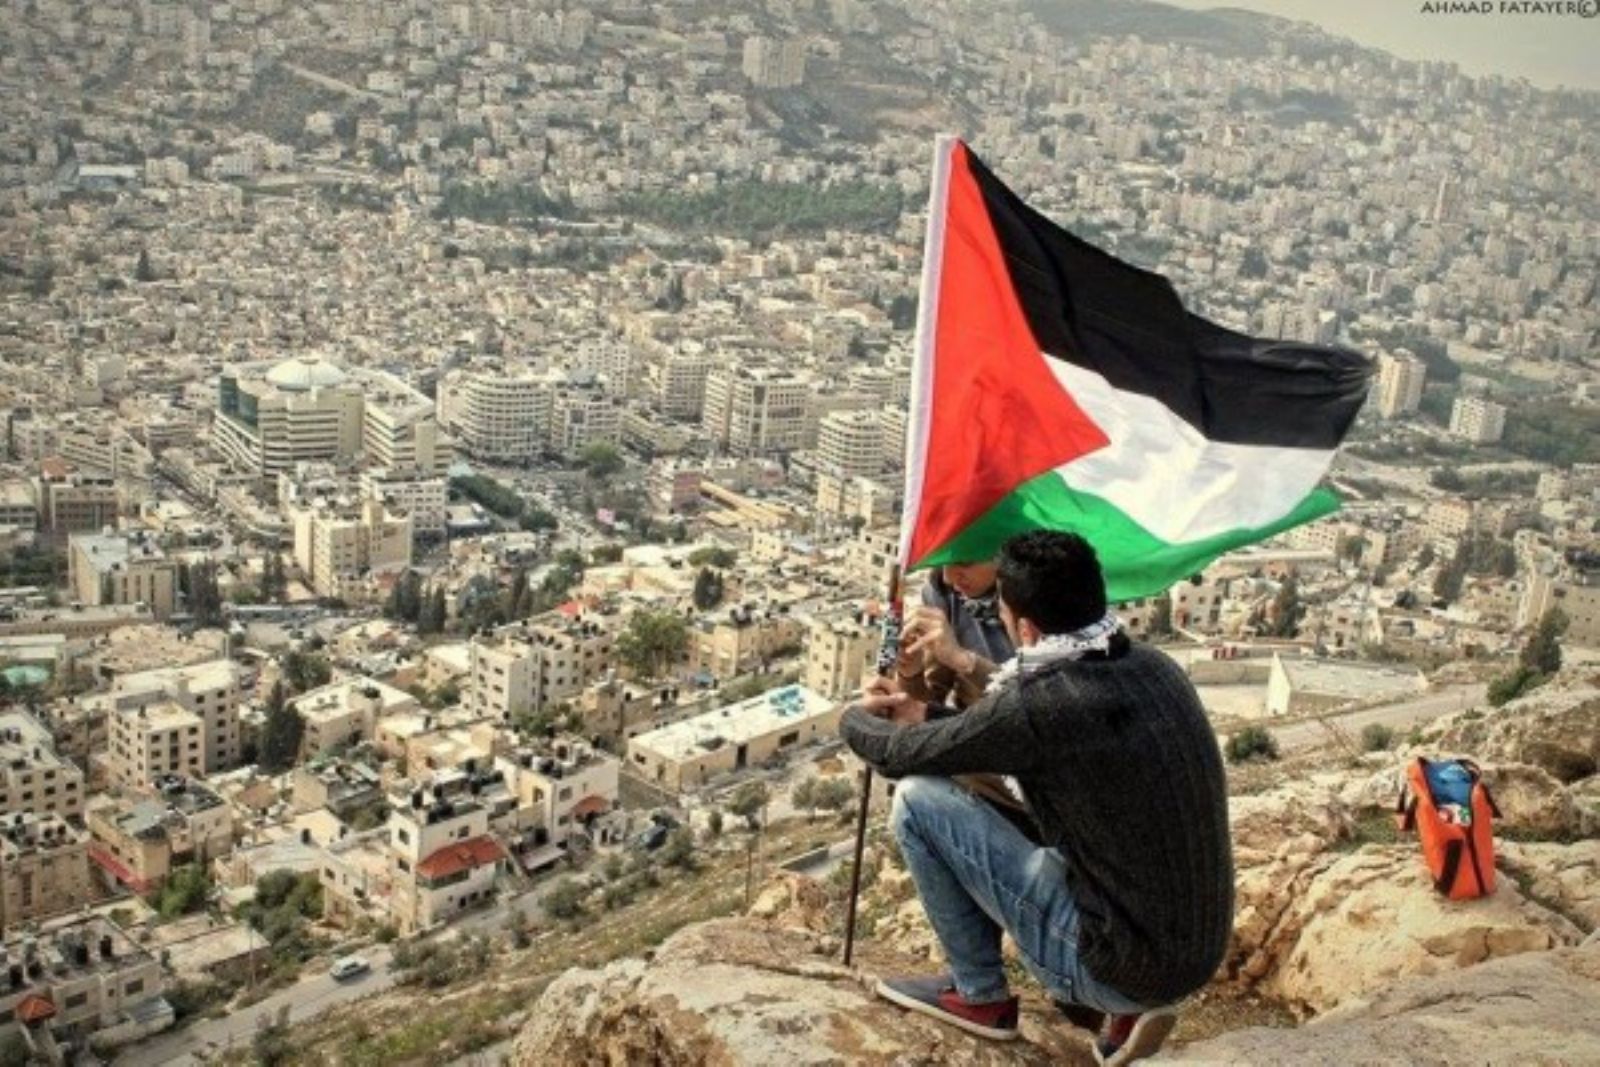 Palestinian population is 4.95 million